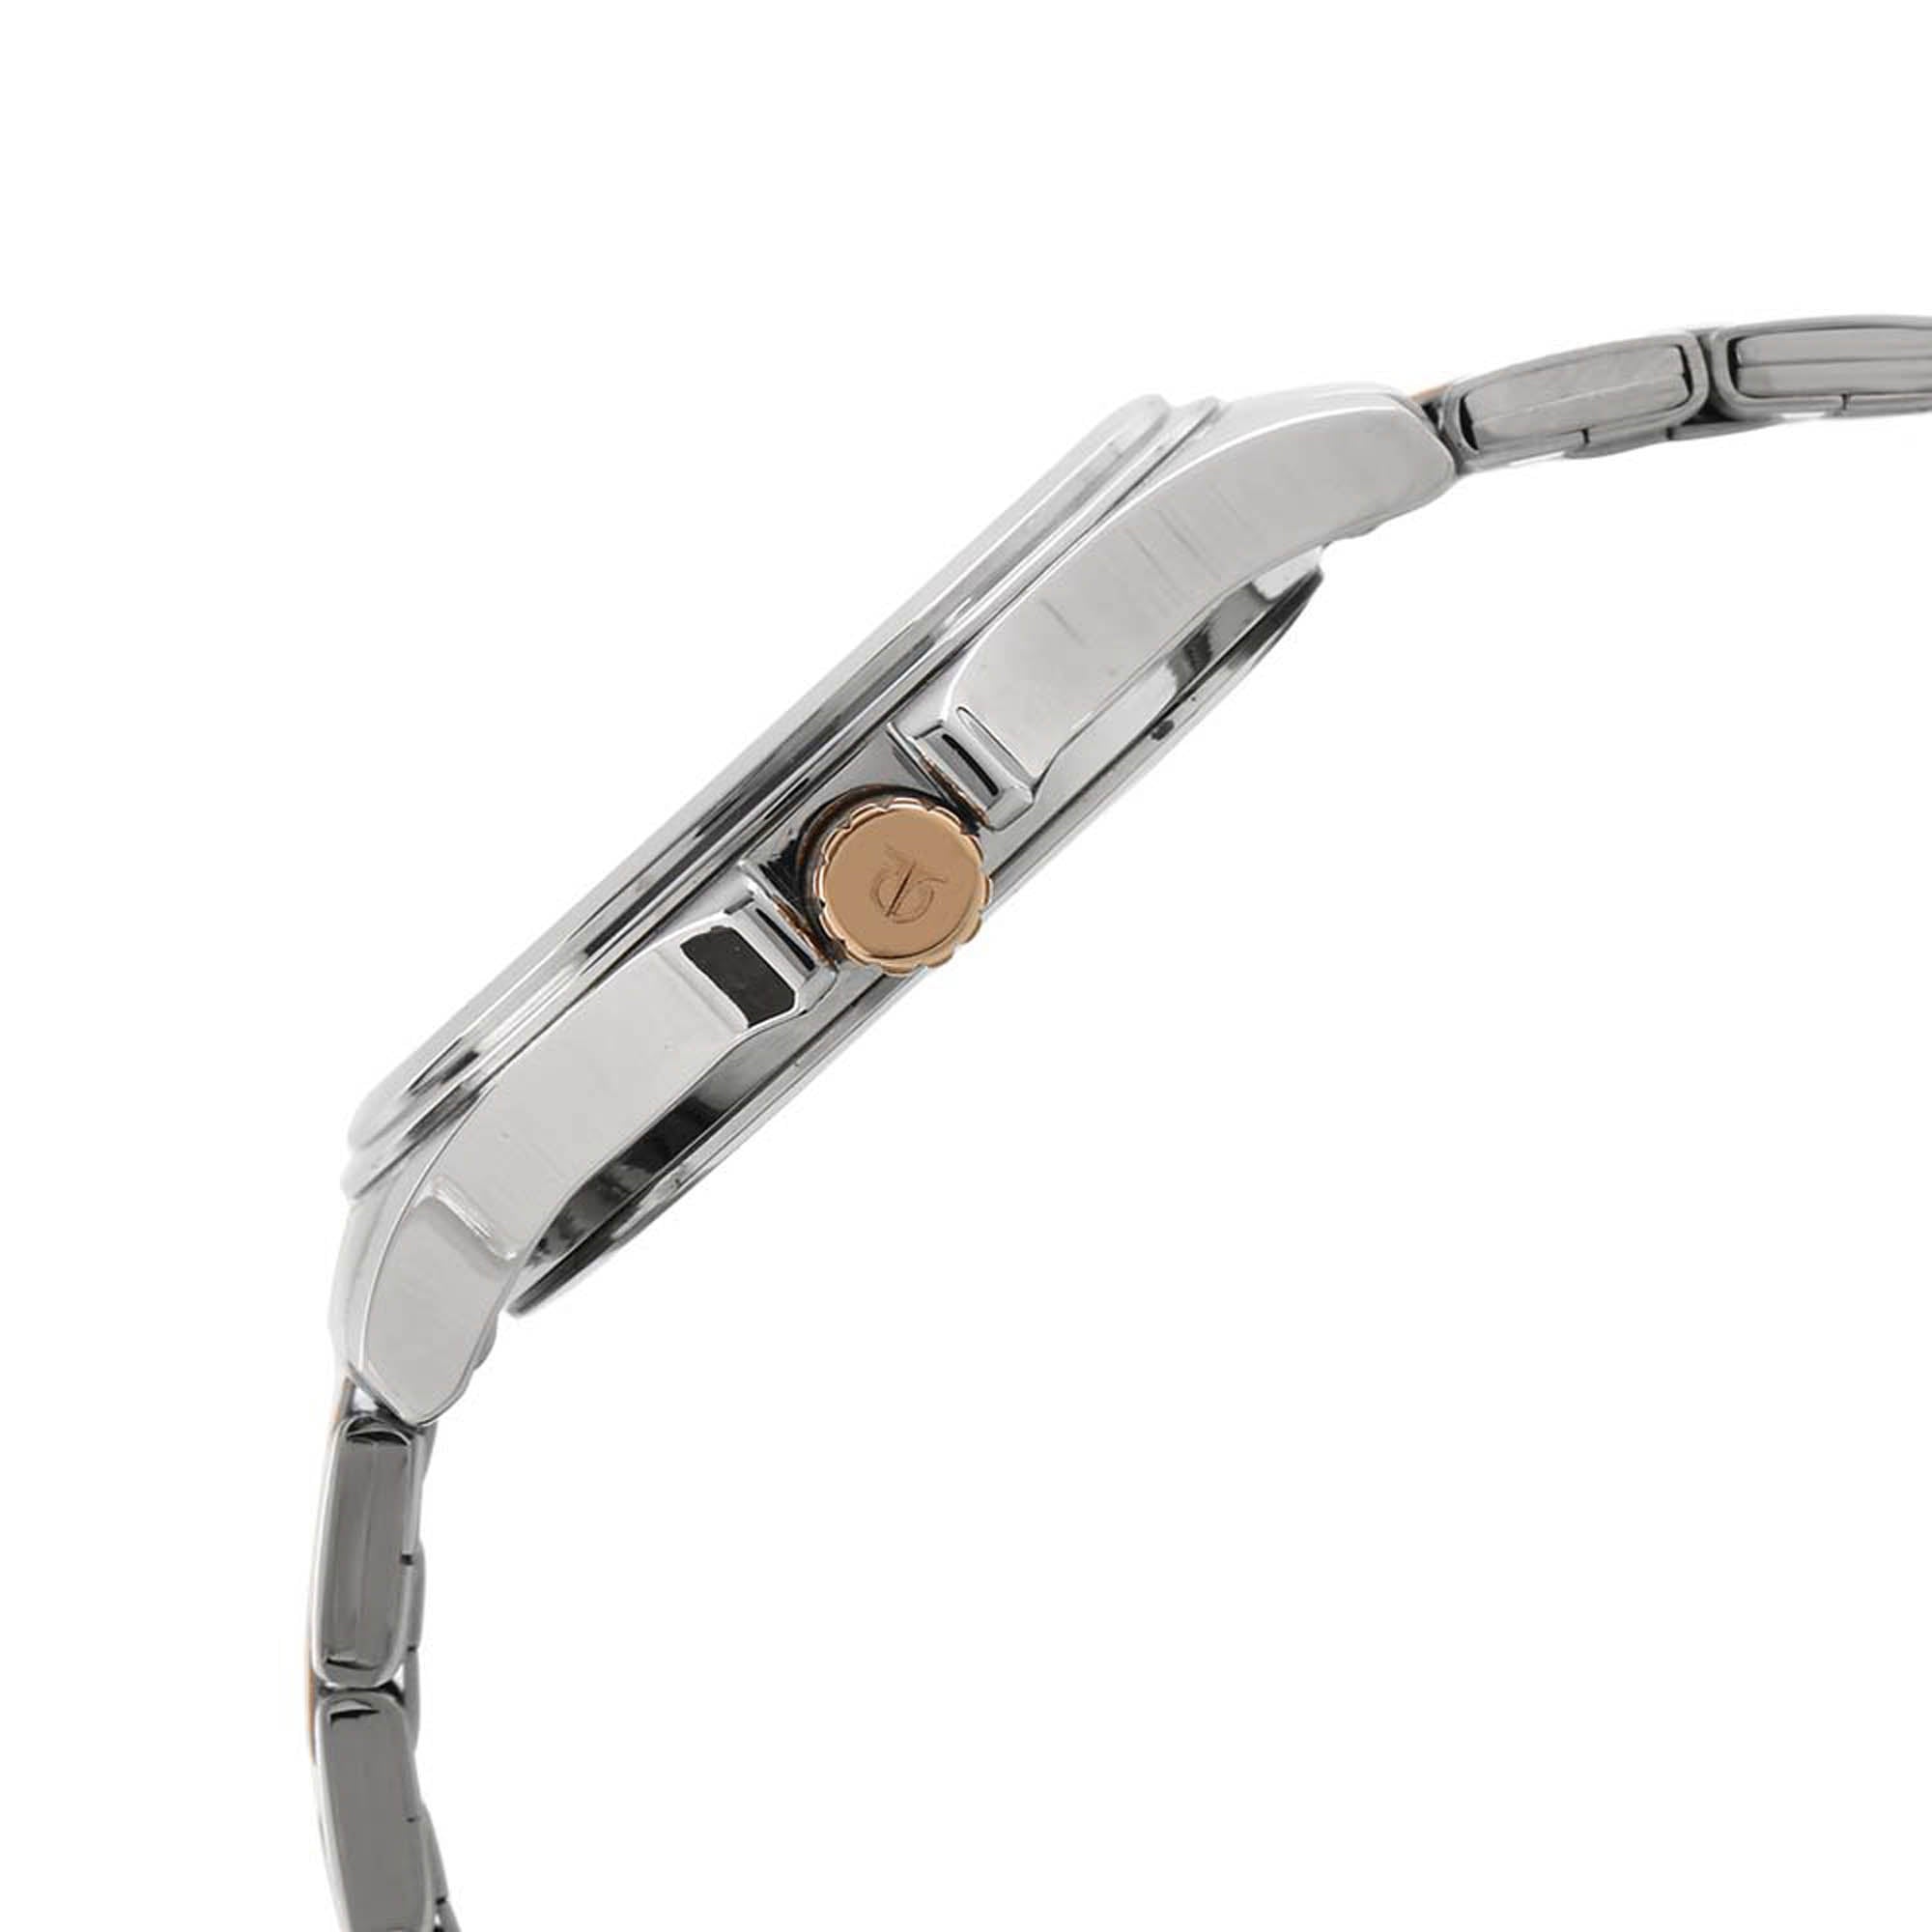 Titan Workwear Brown Dial Multi Stainless Steel Strap watch for Men